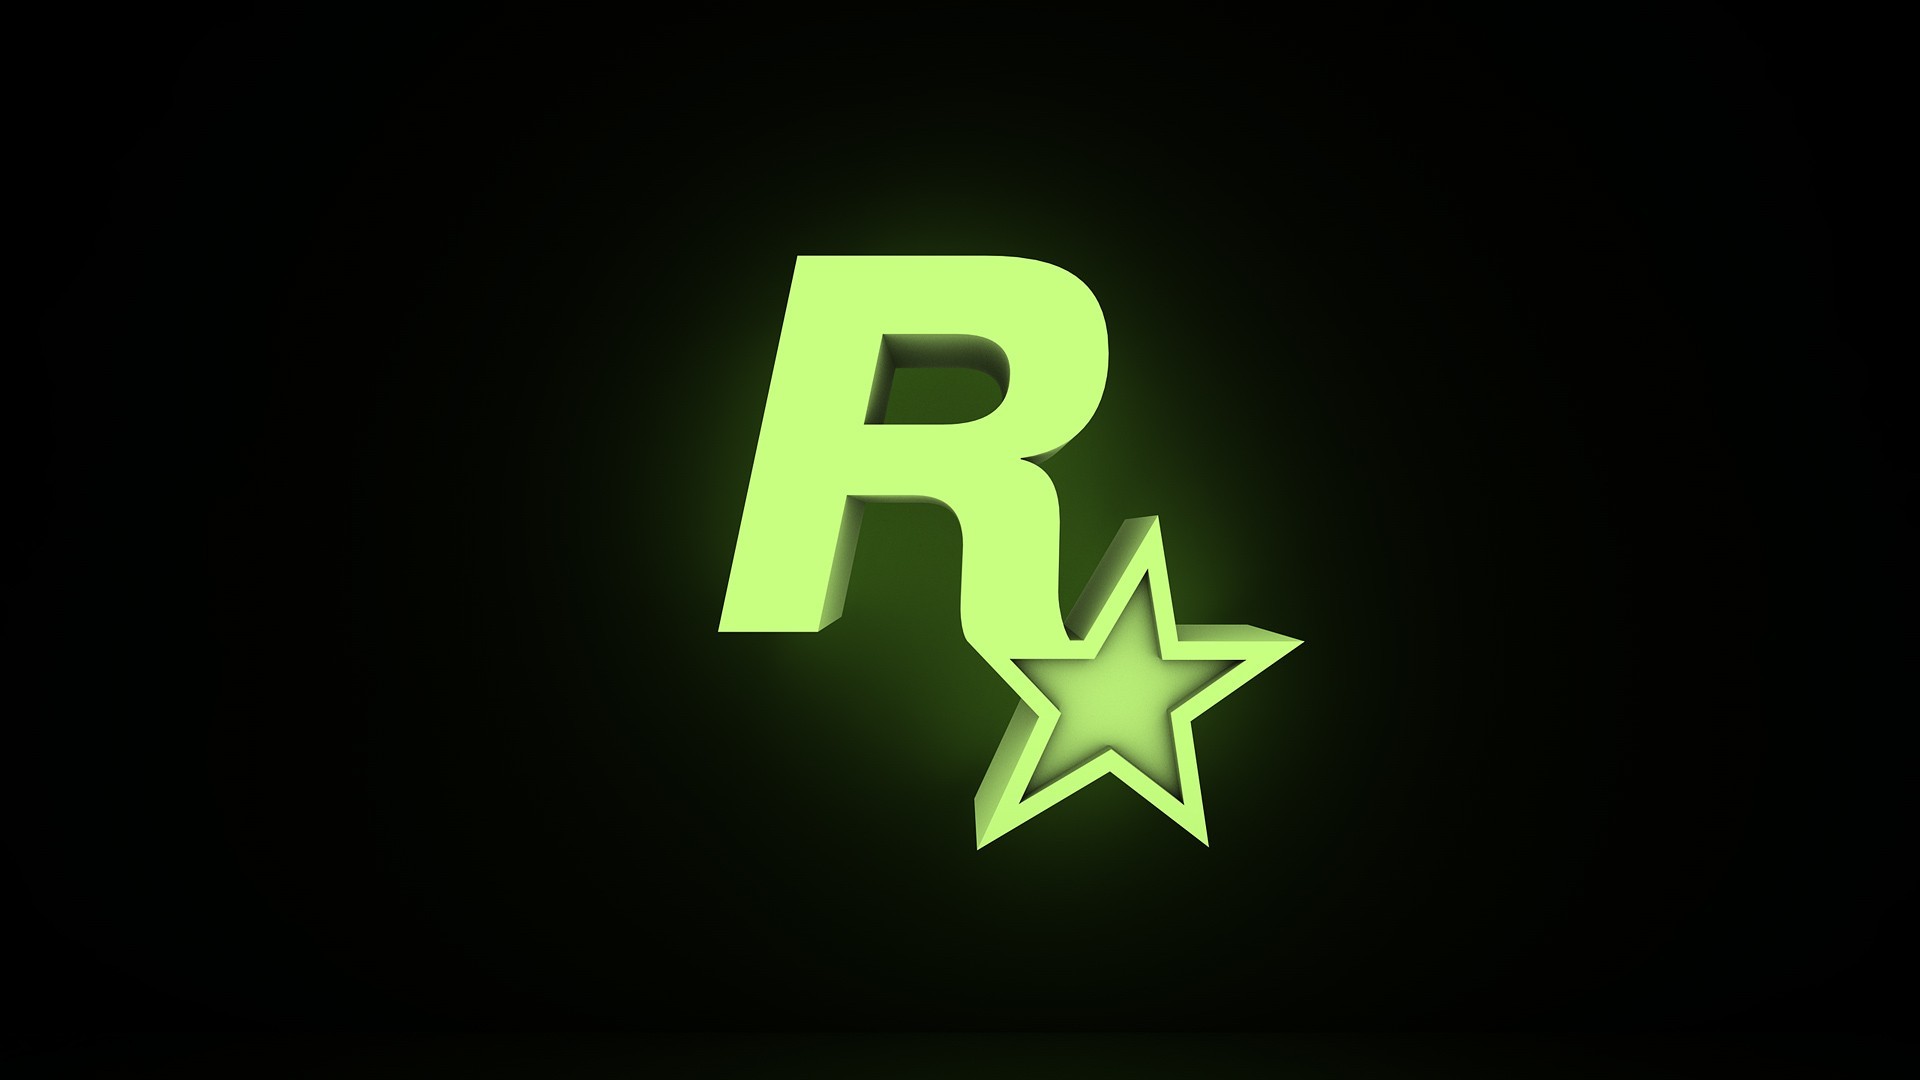 1920x1080 Rockstar Games Wallpaper  Rockstar Games Glow Logos New 